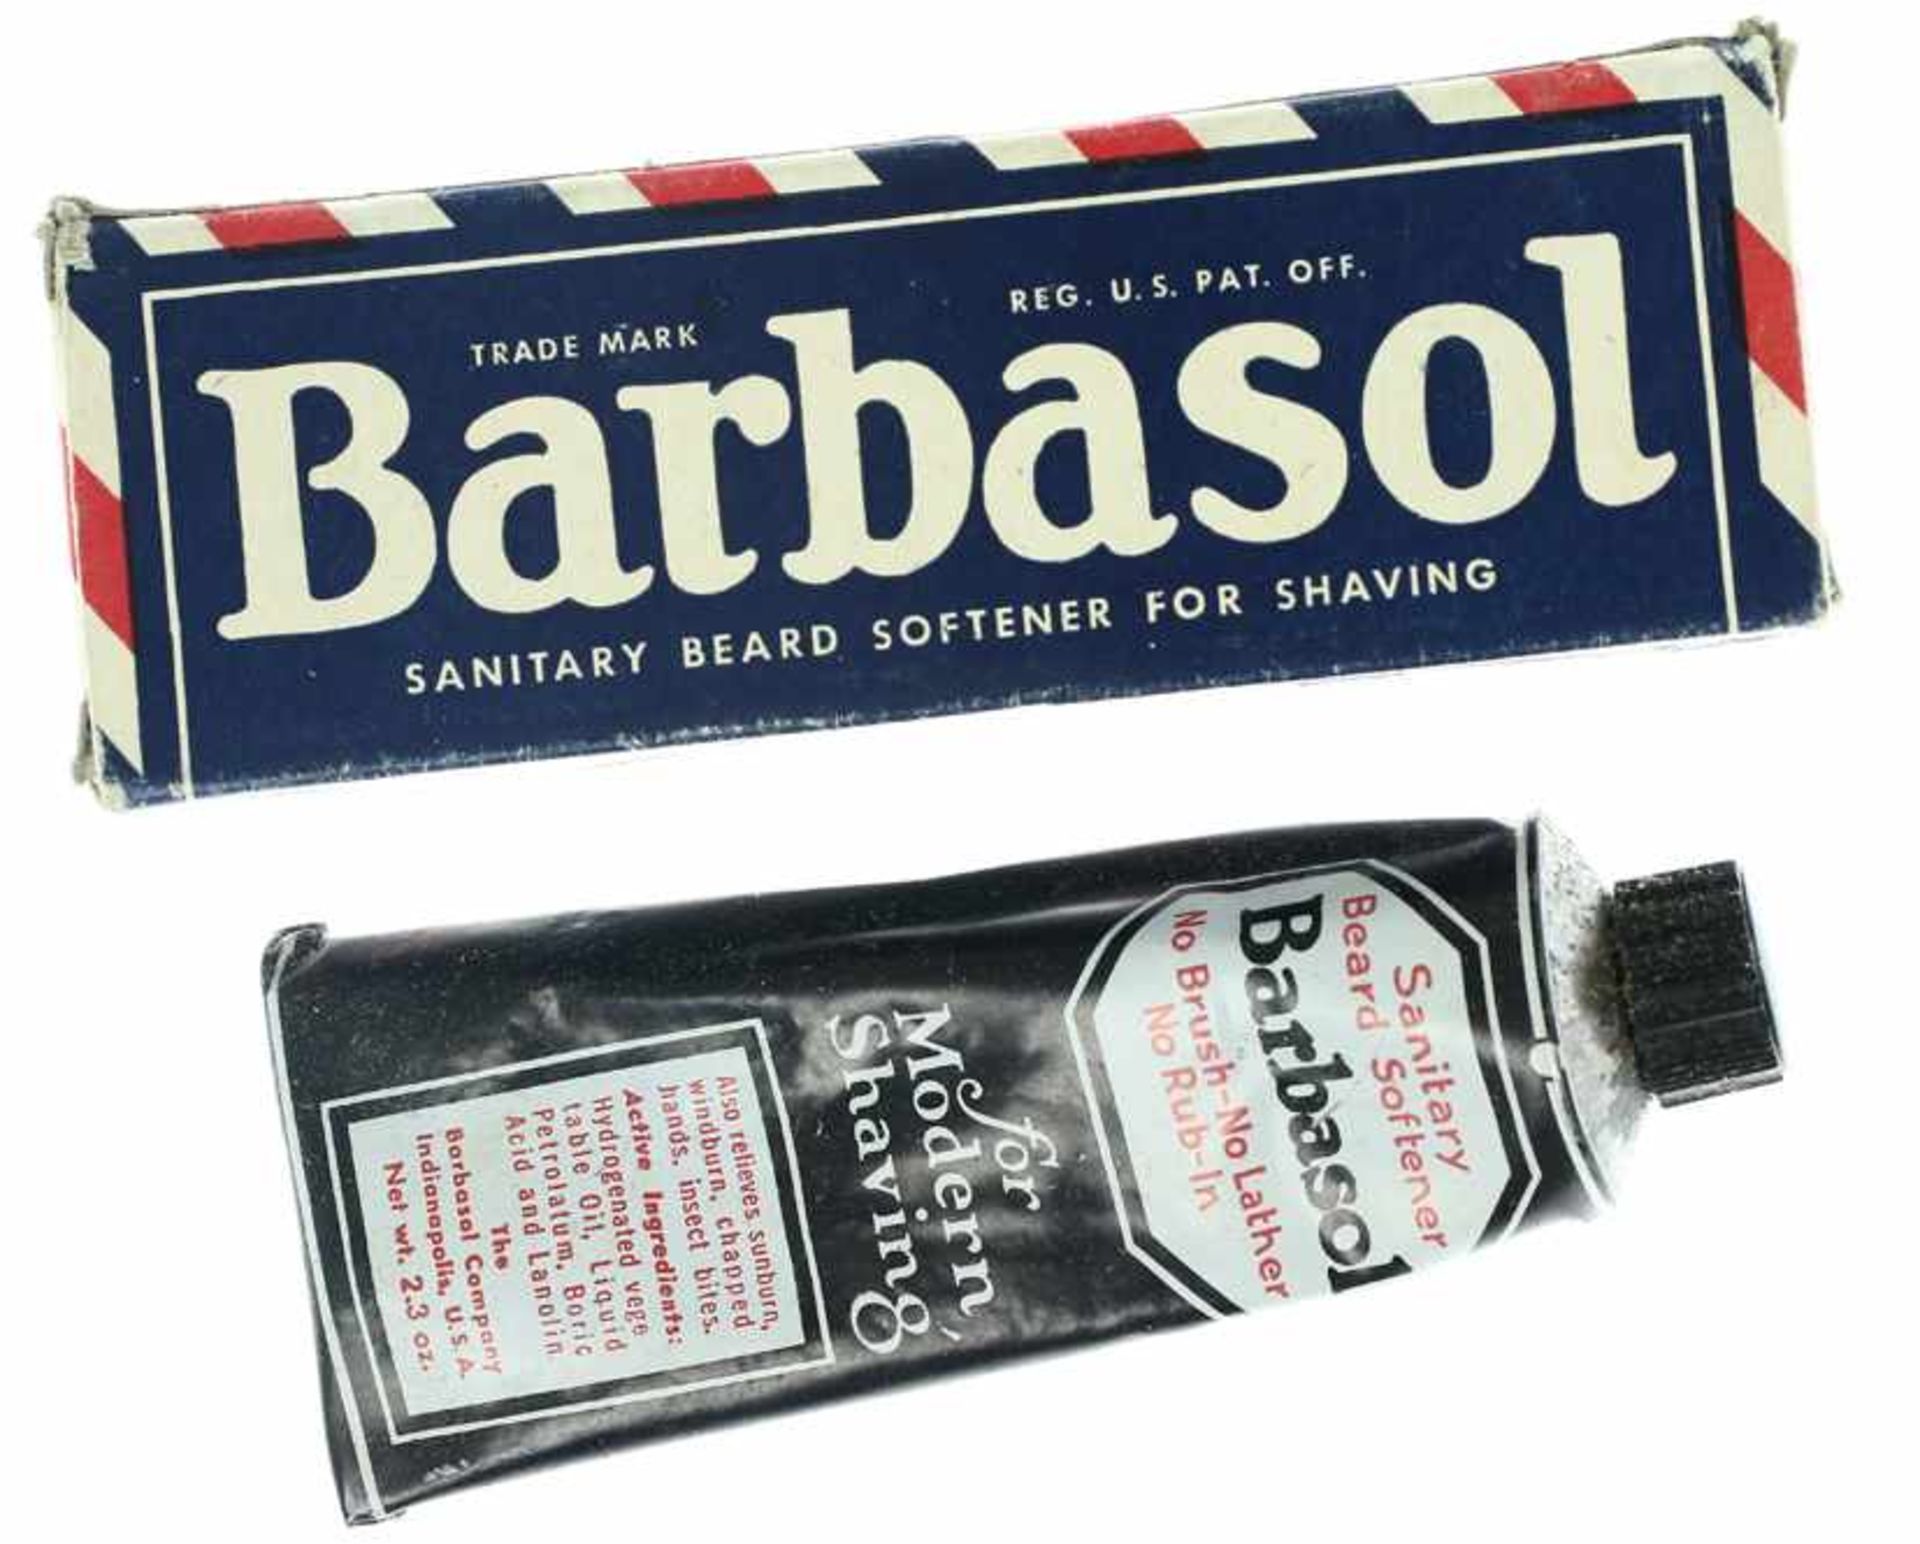 USA - Barbasol Sanitary beard softener for shaving, in original box